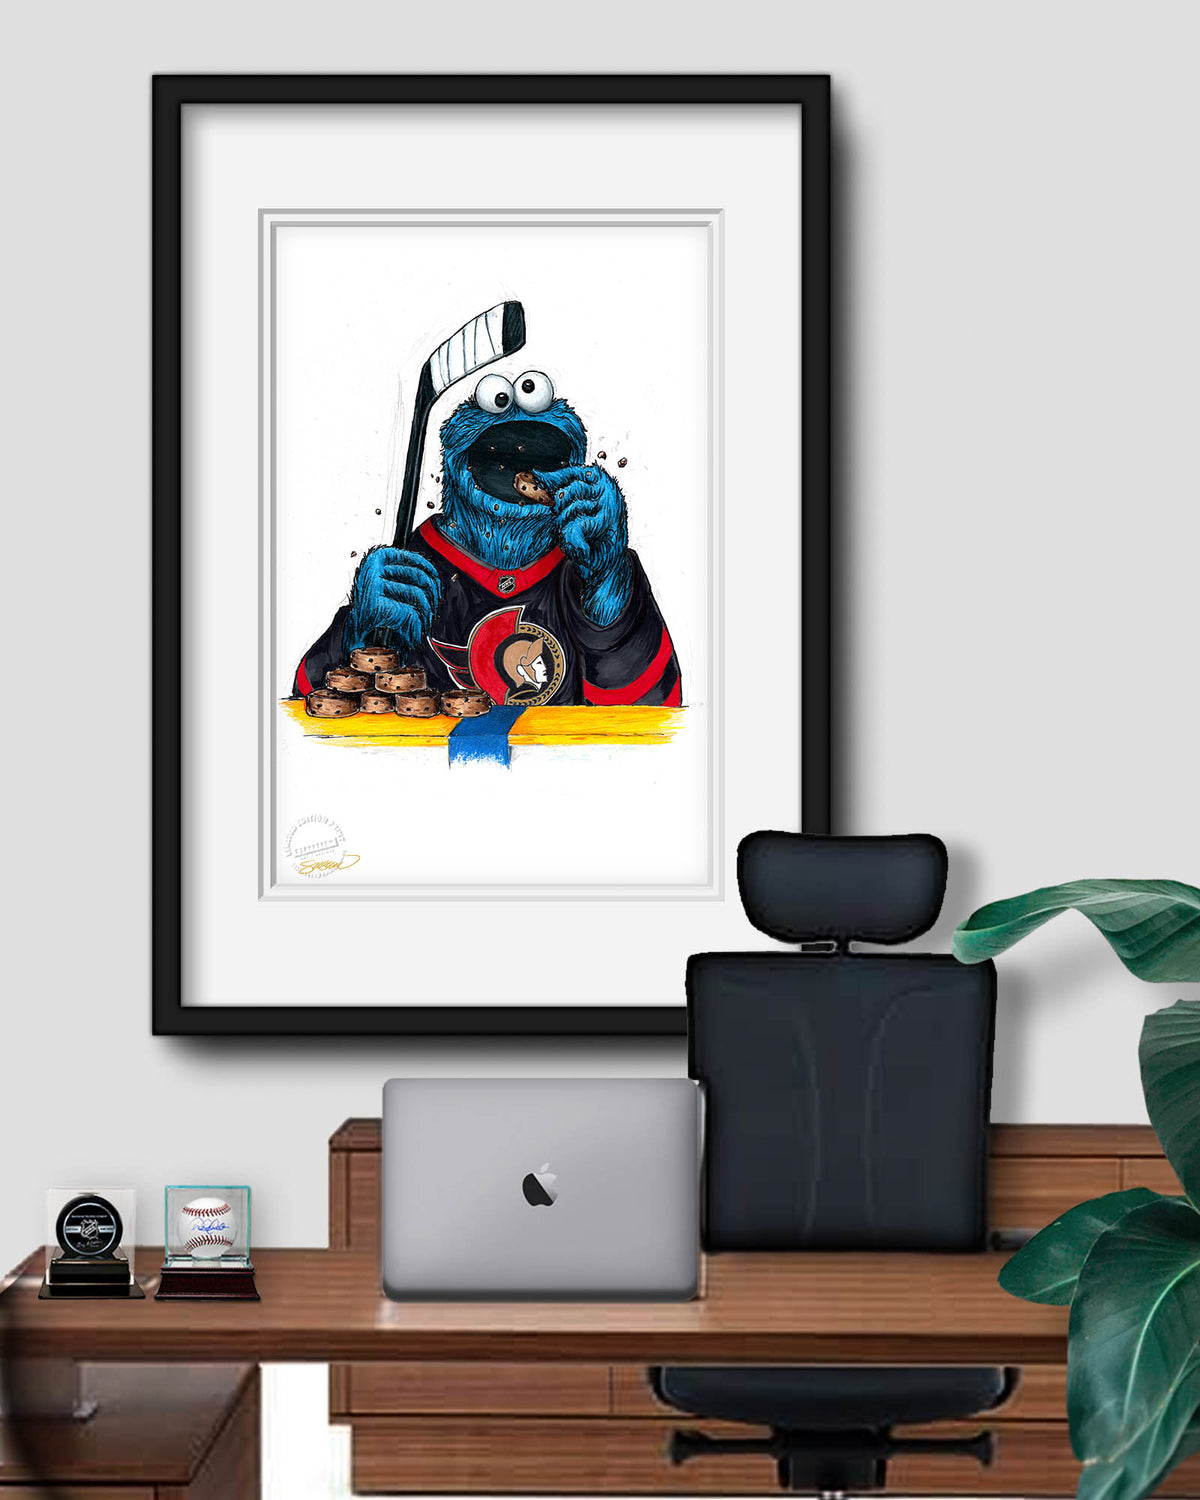 Cookie Monster x NHL Senators Limited Edition Fine Art Print